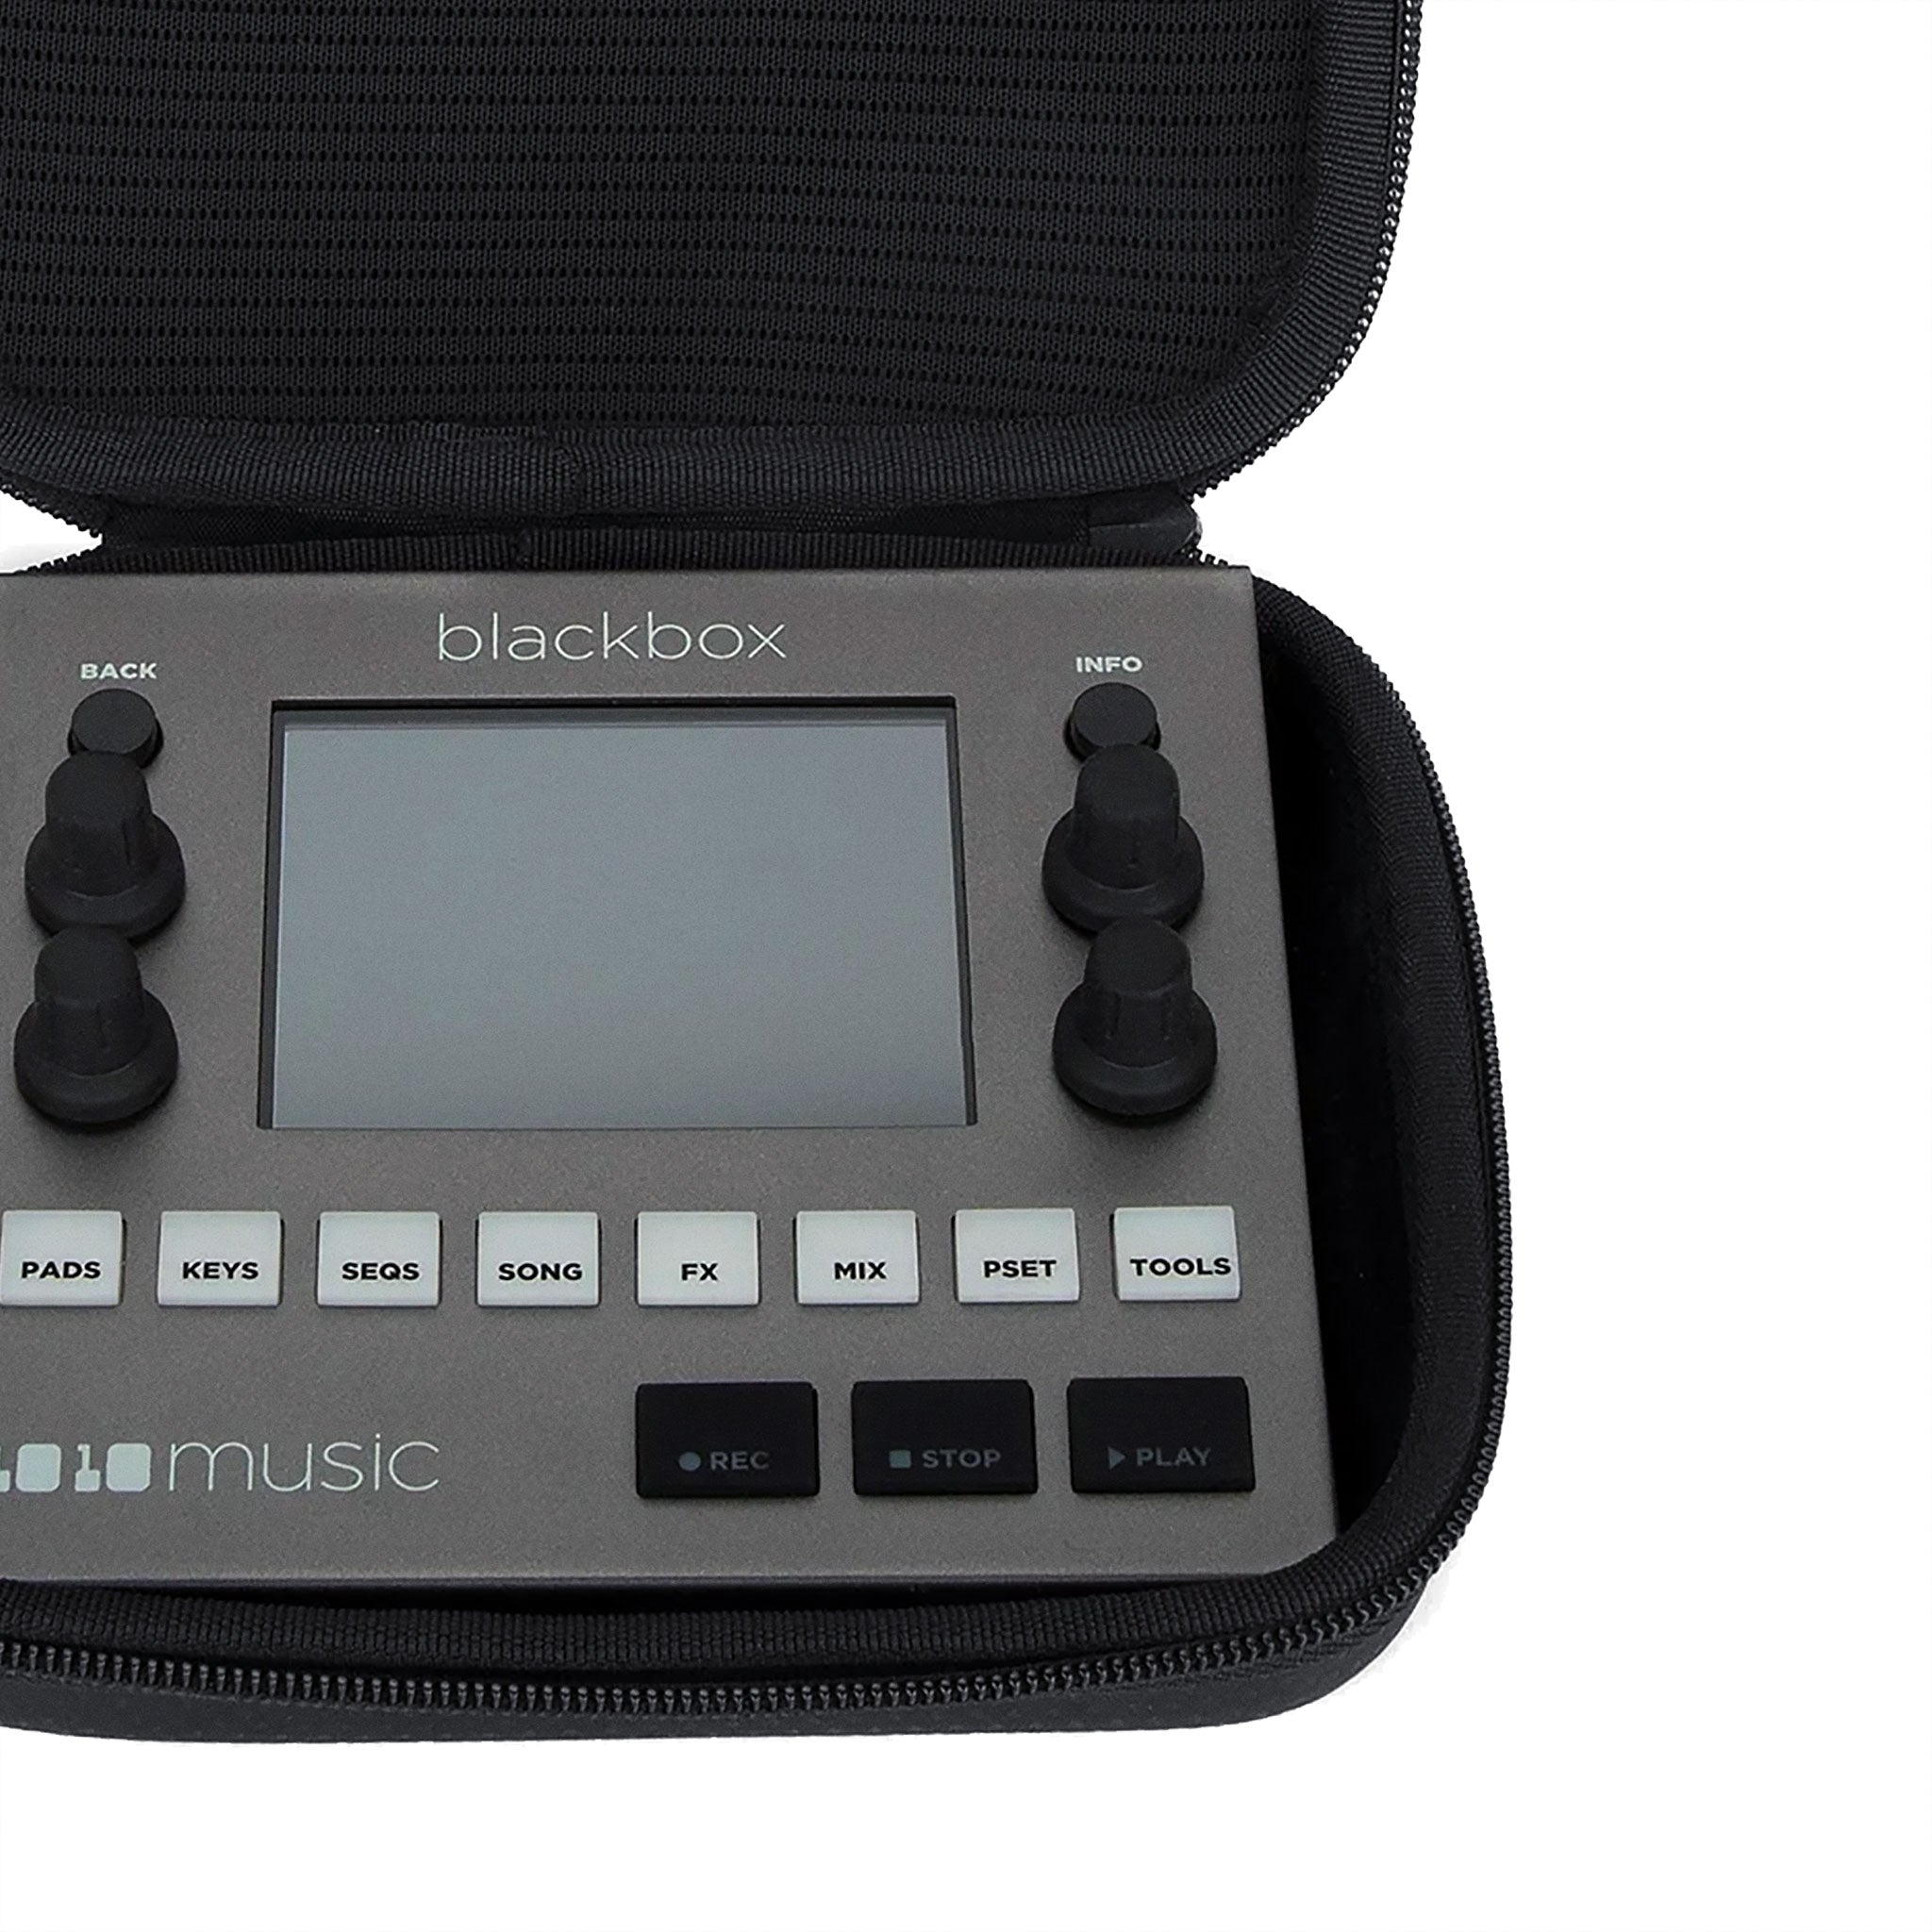 GLIDE Case for 1010music Blackbox / Bluebox